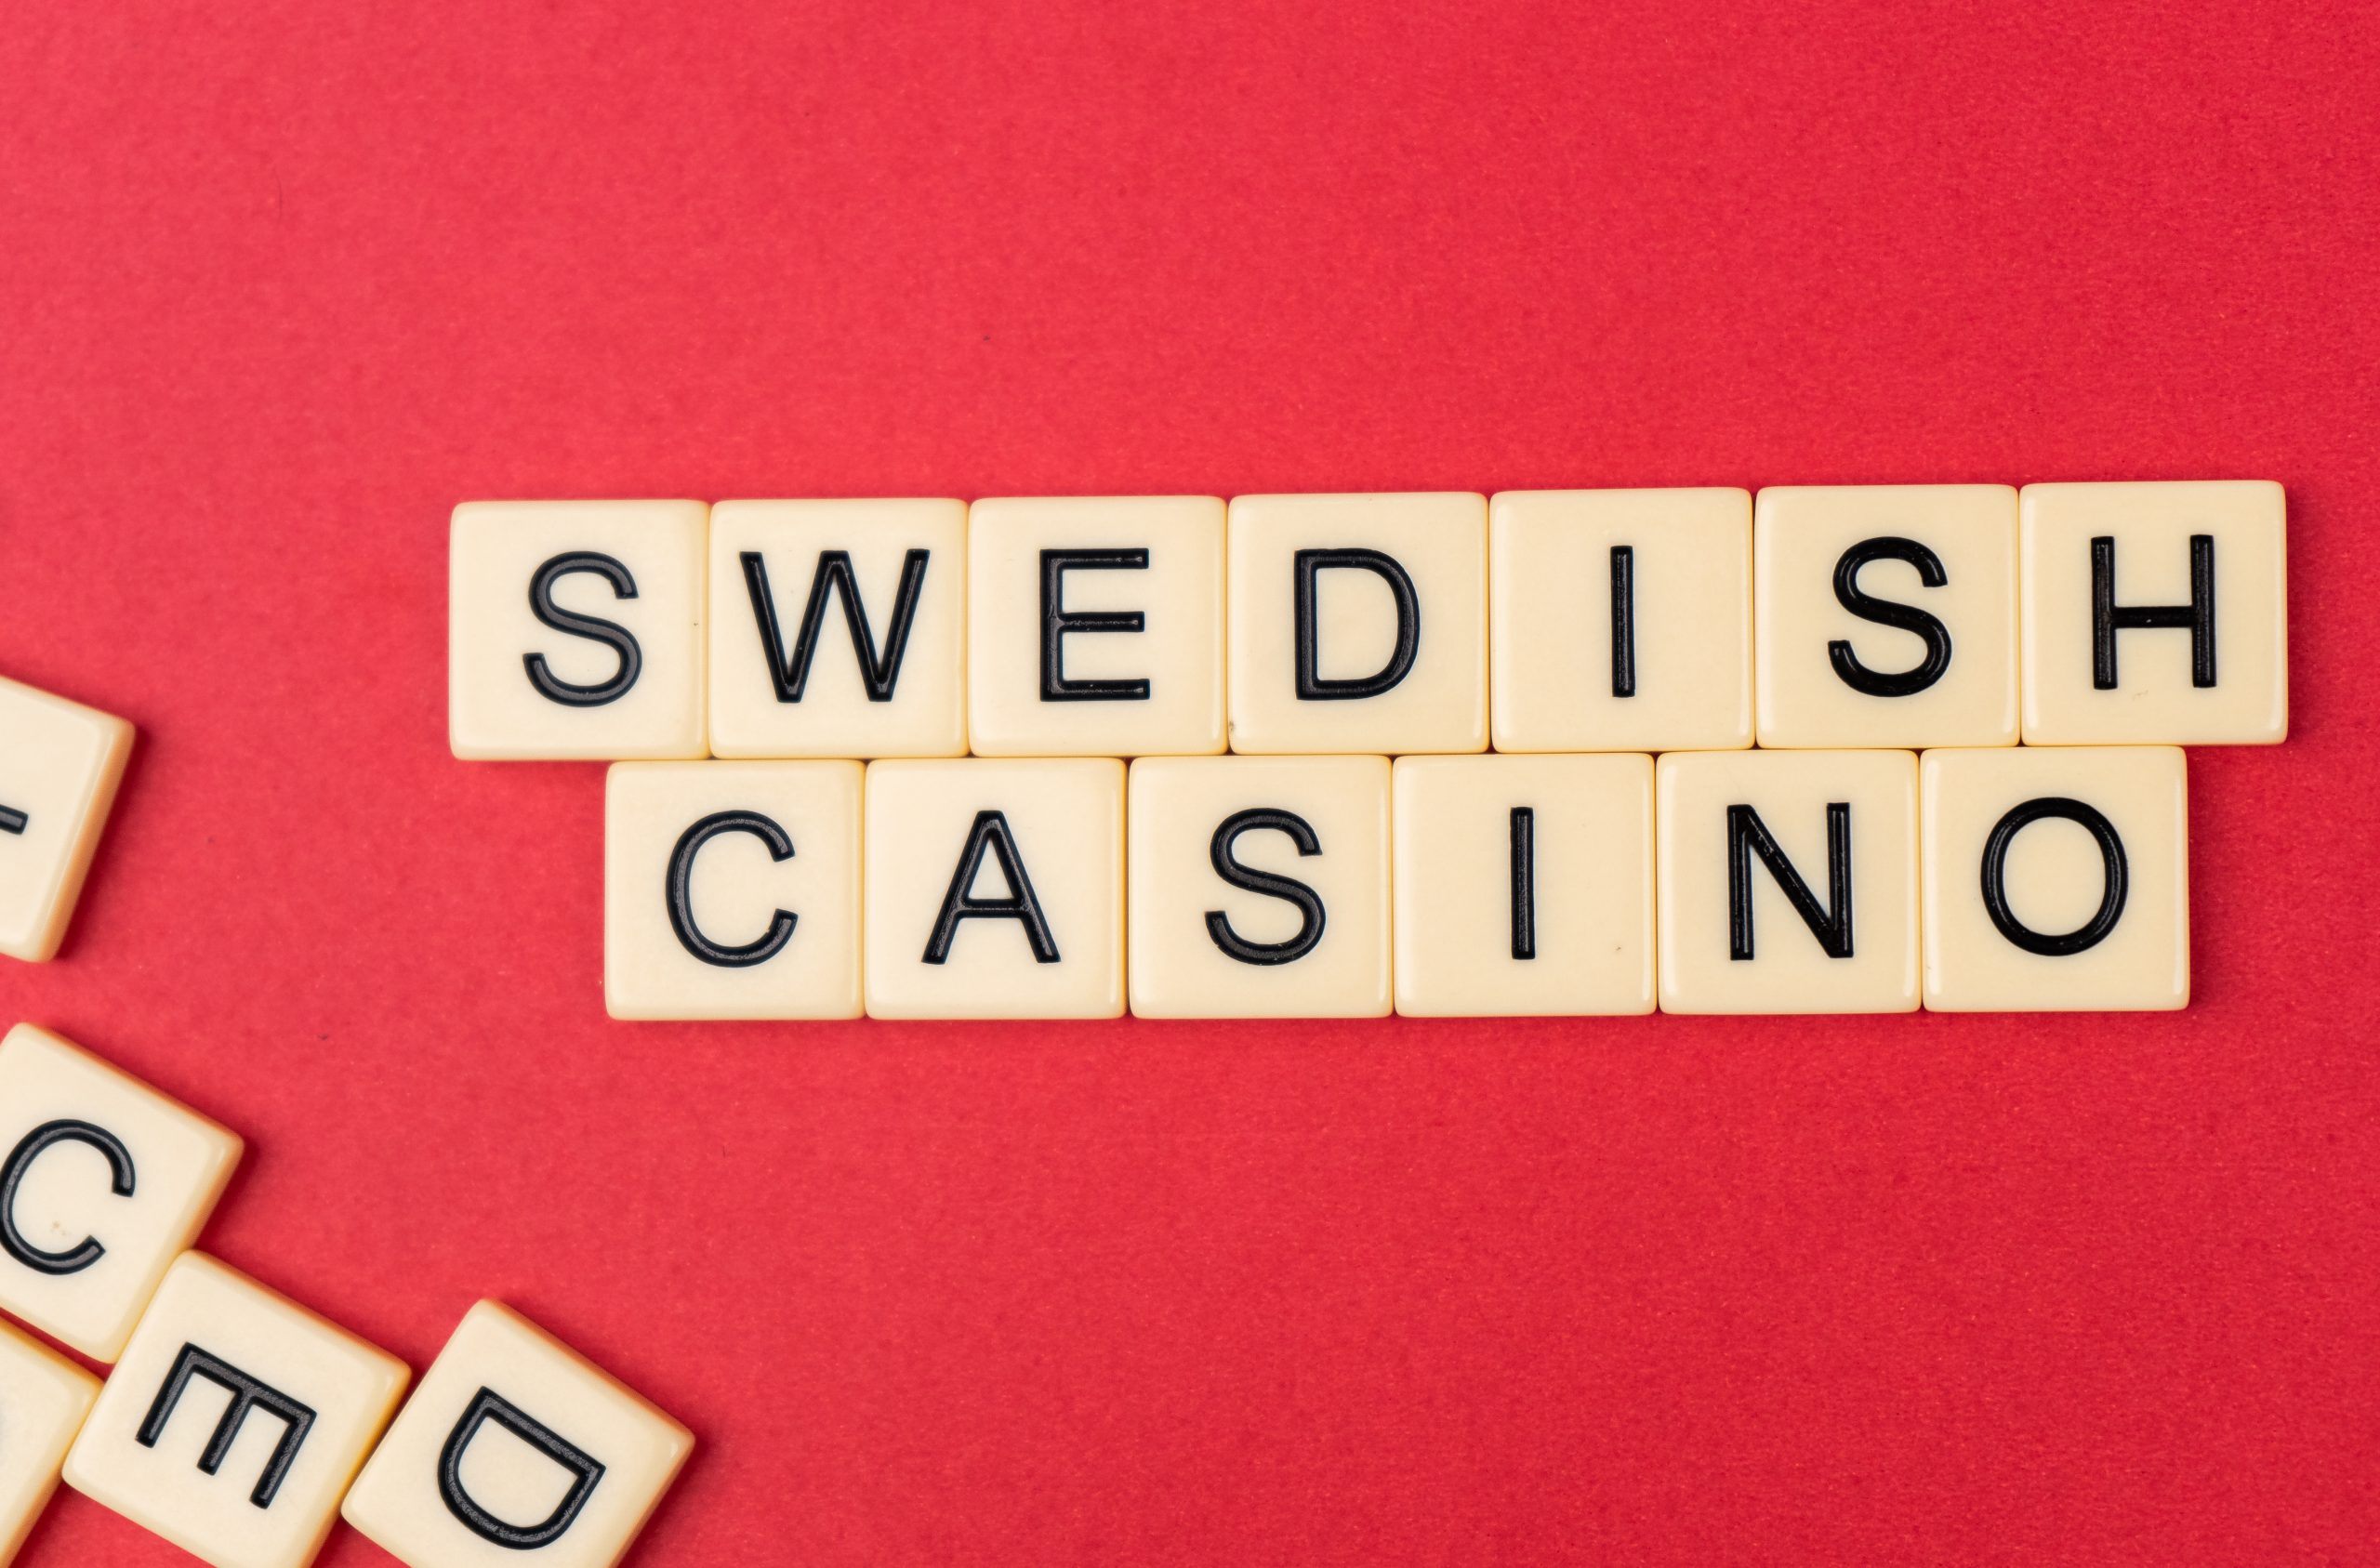 Swedish Casino written on scrabble